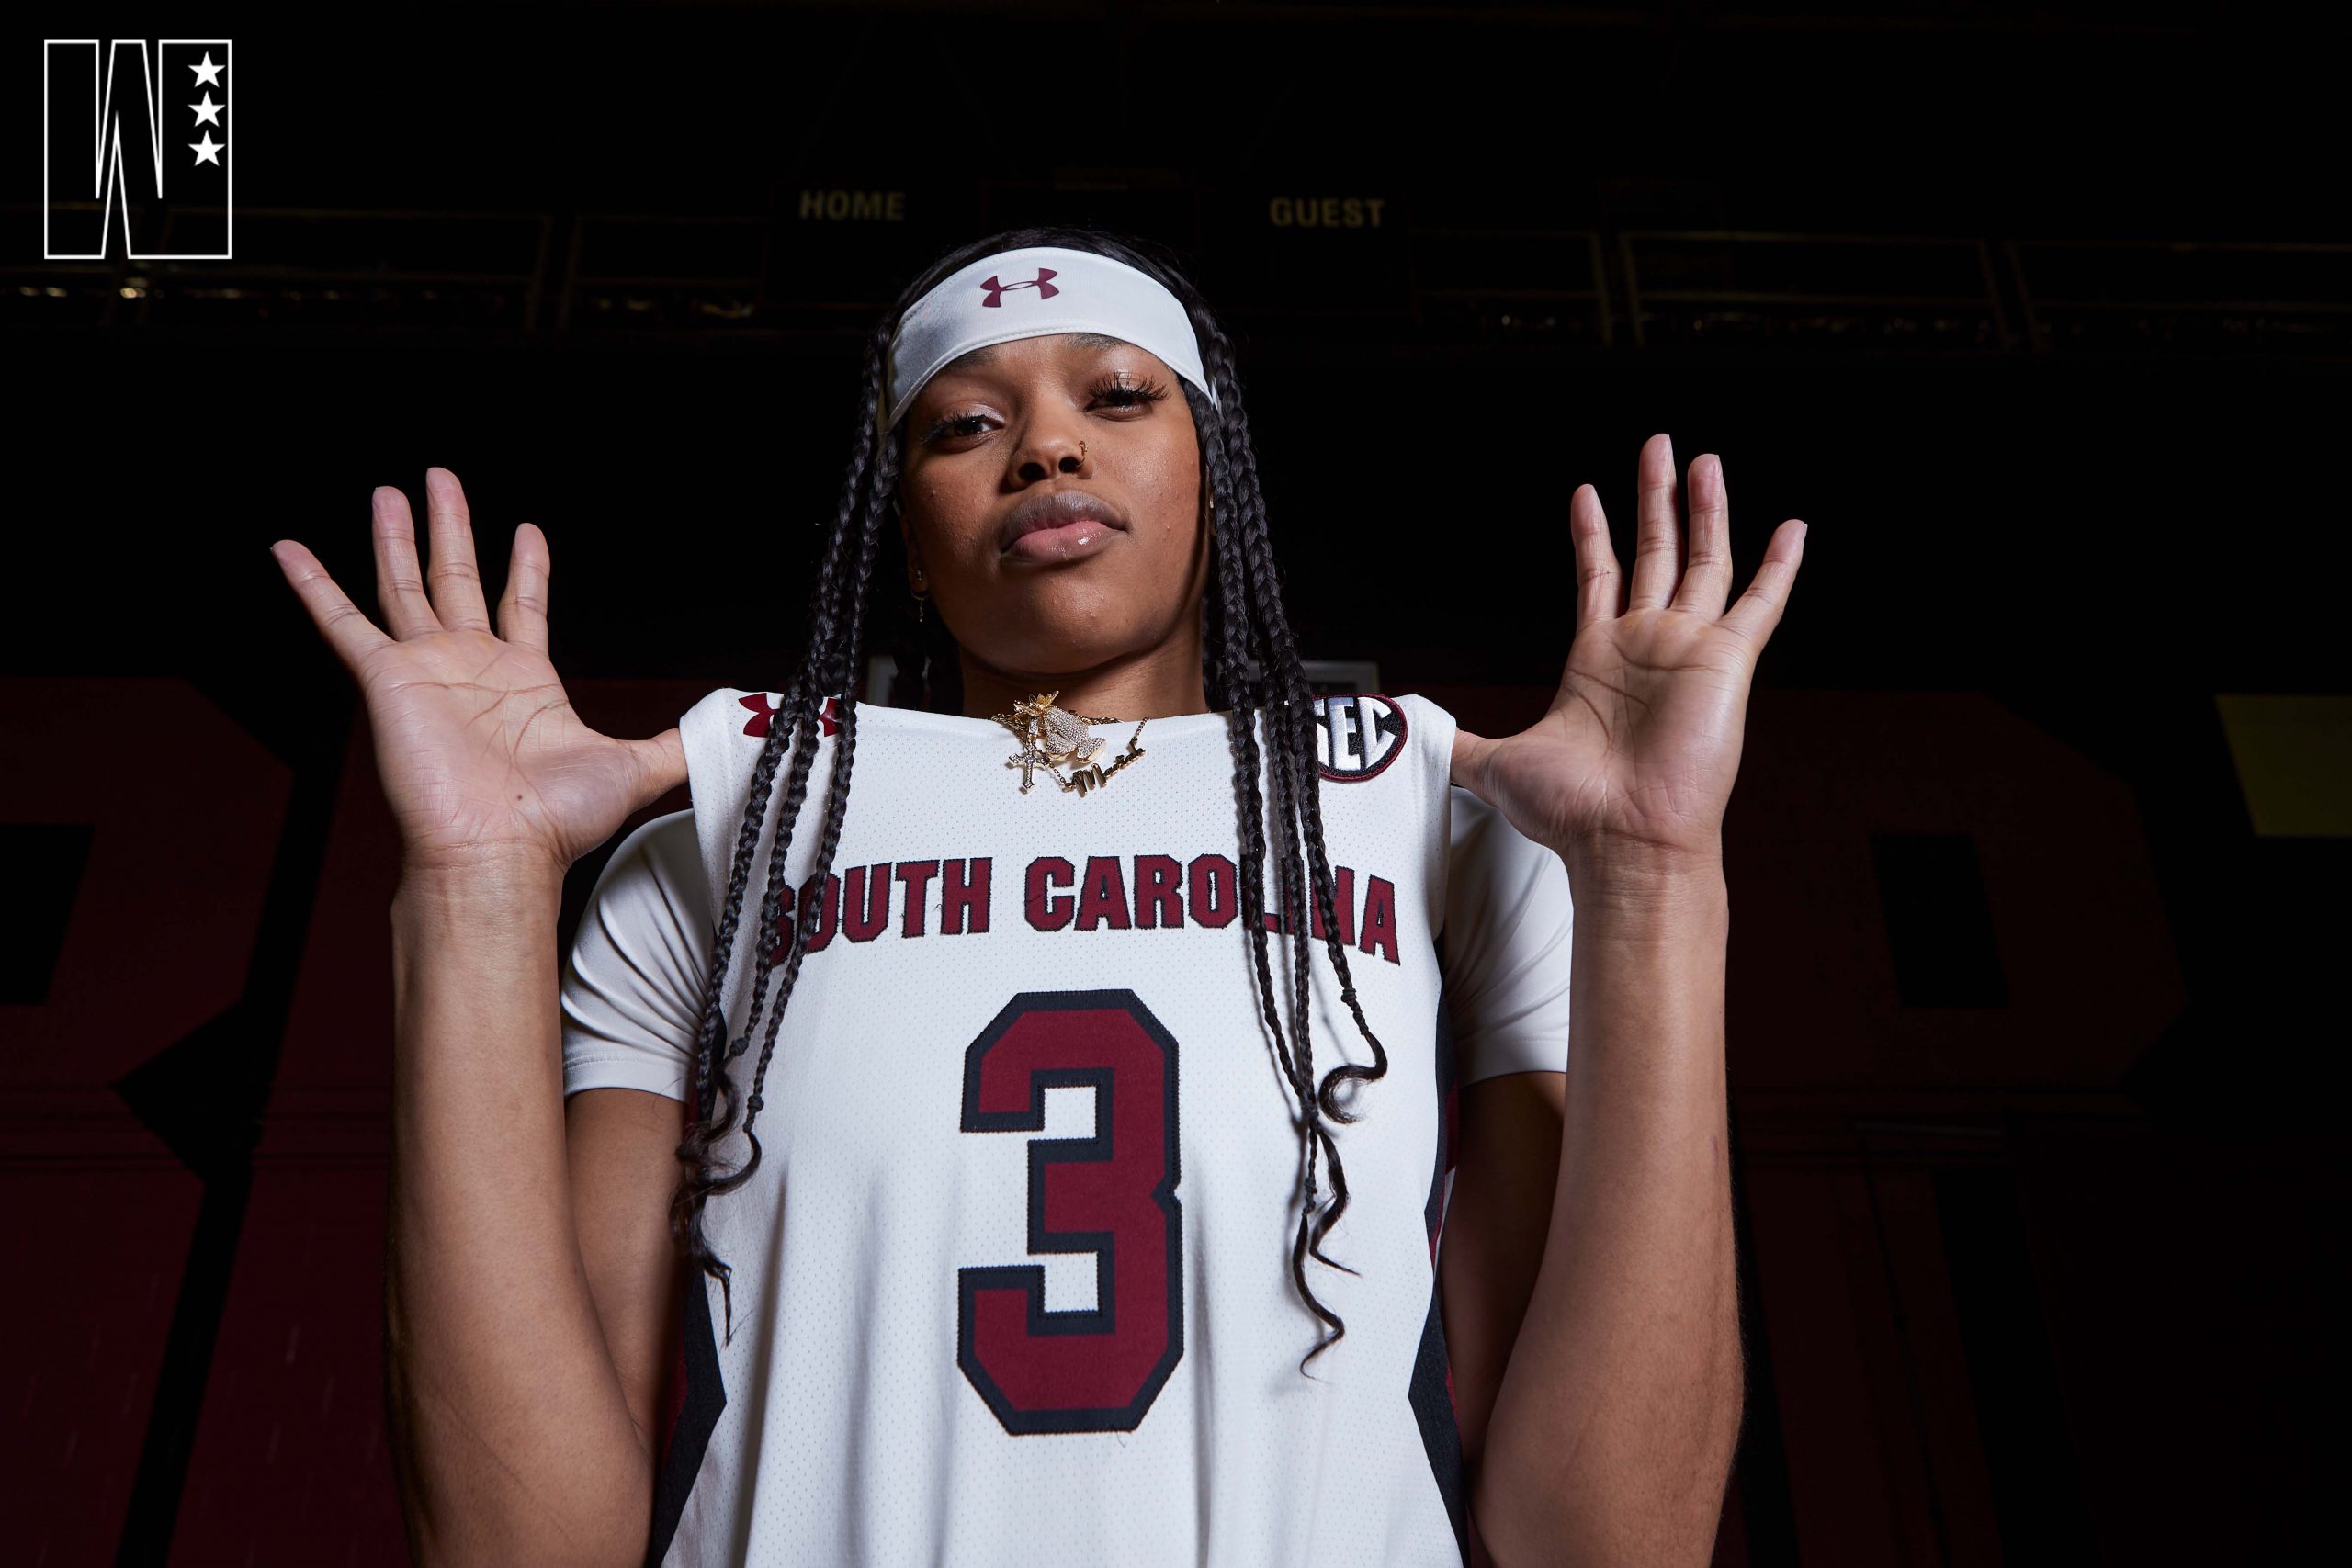 South Carolina's Dawn Staley plays SEC villain perfectly